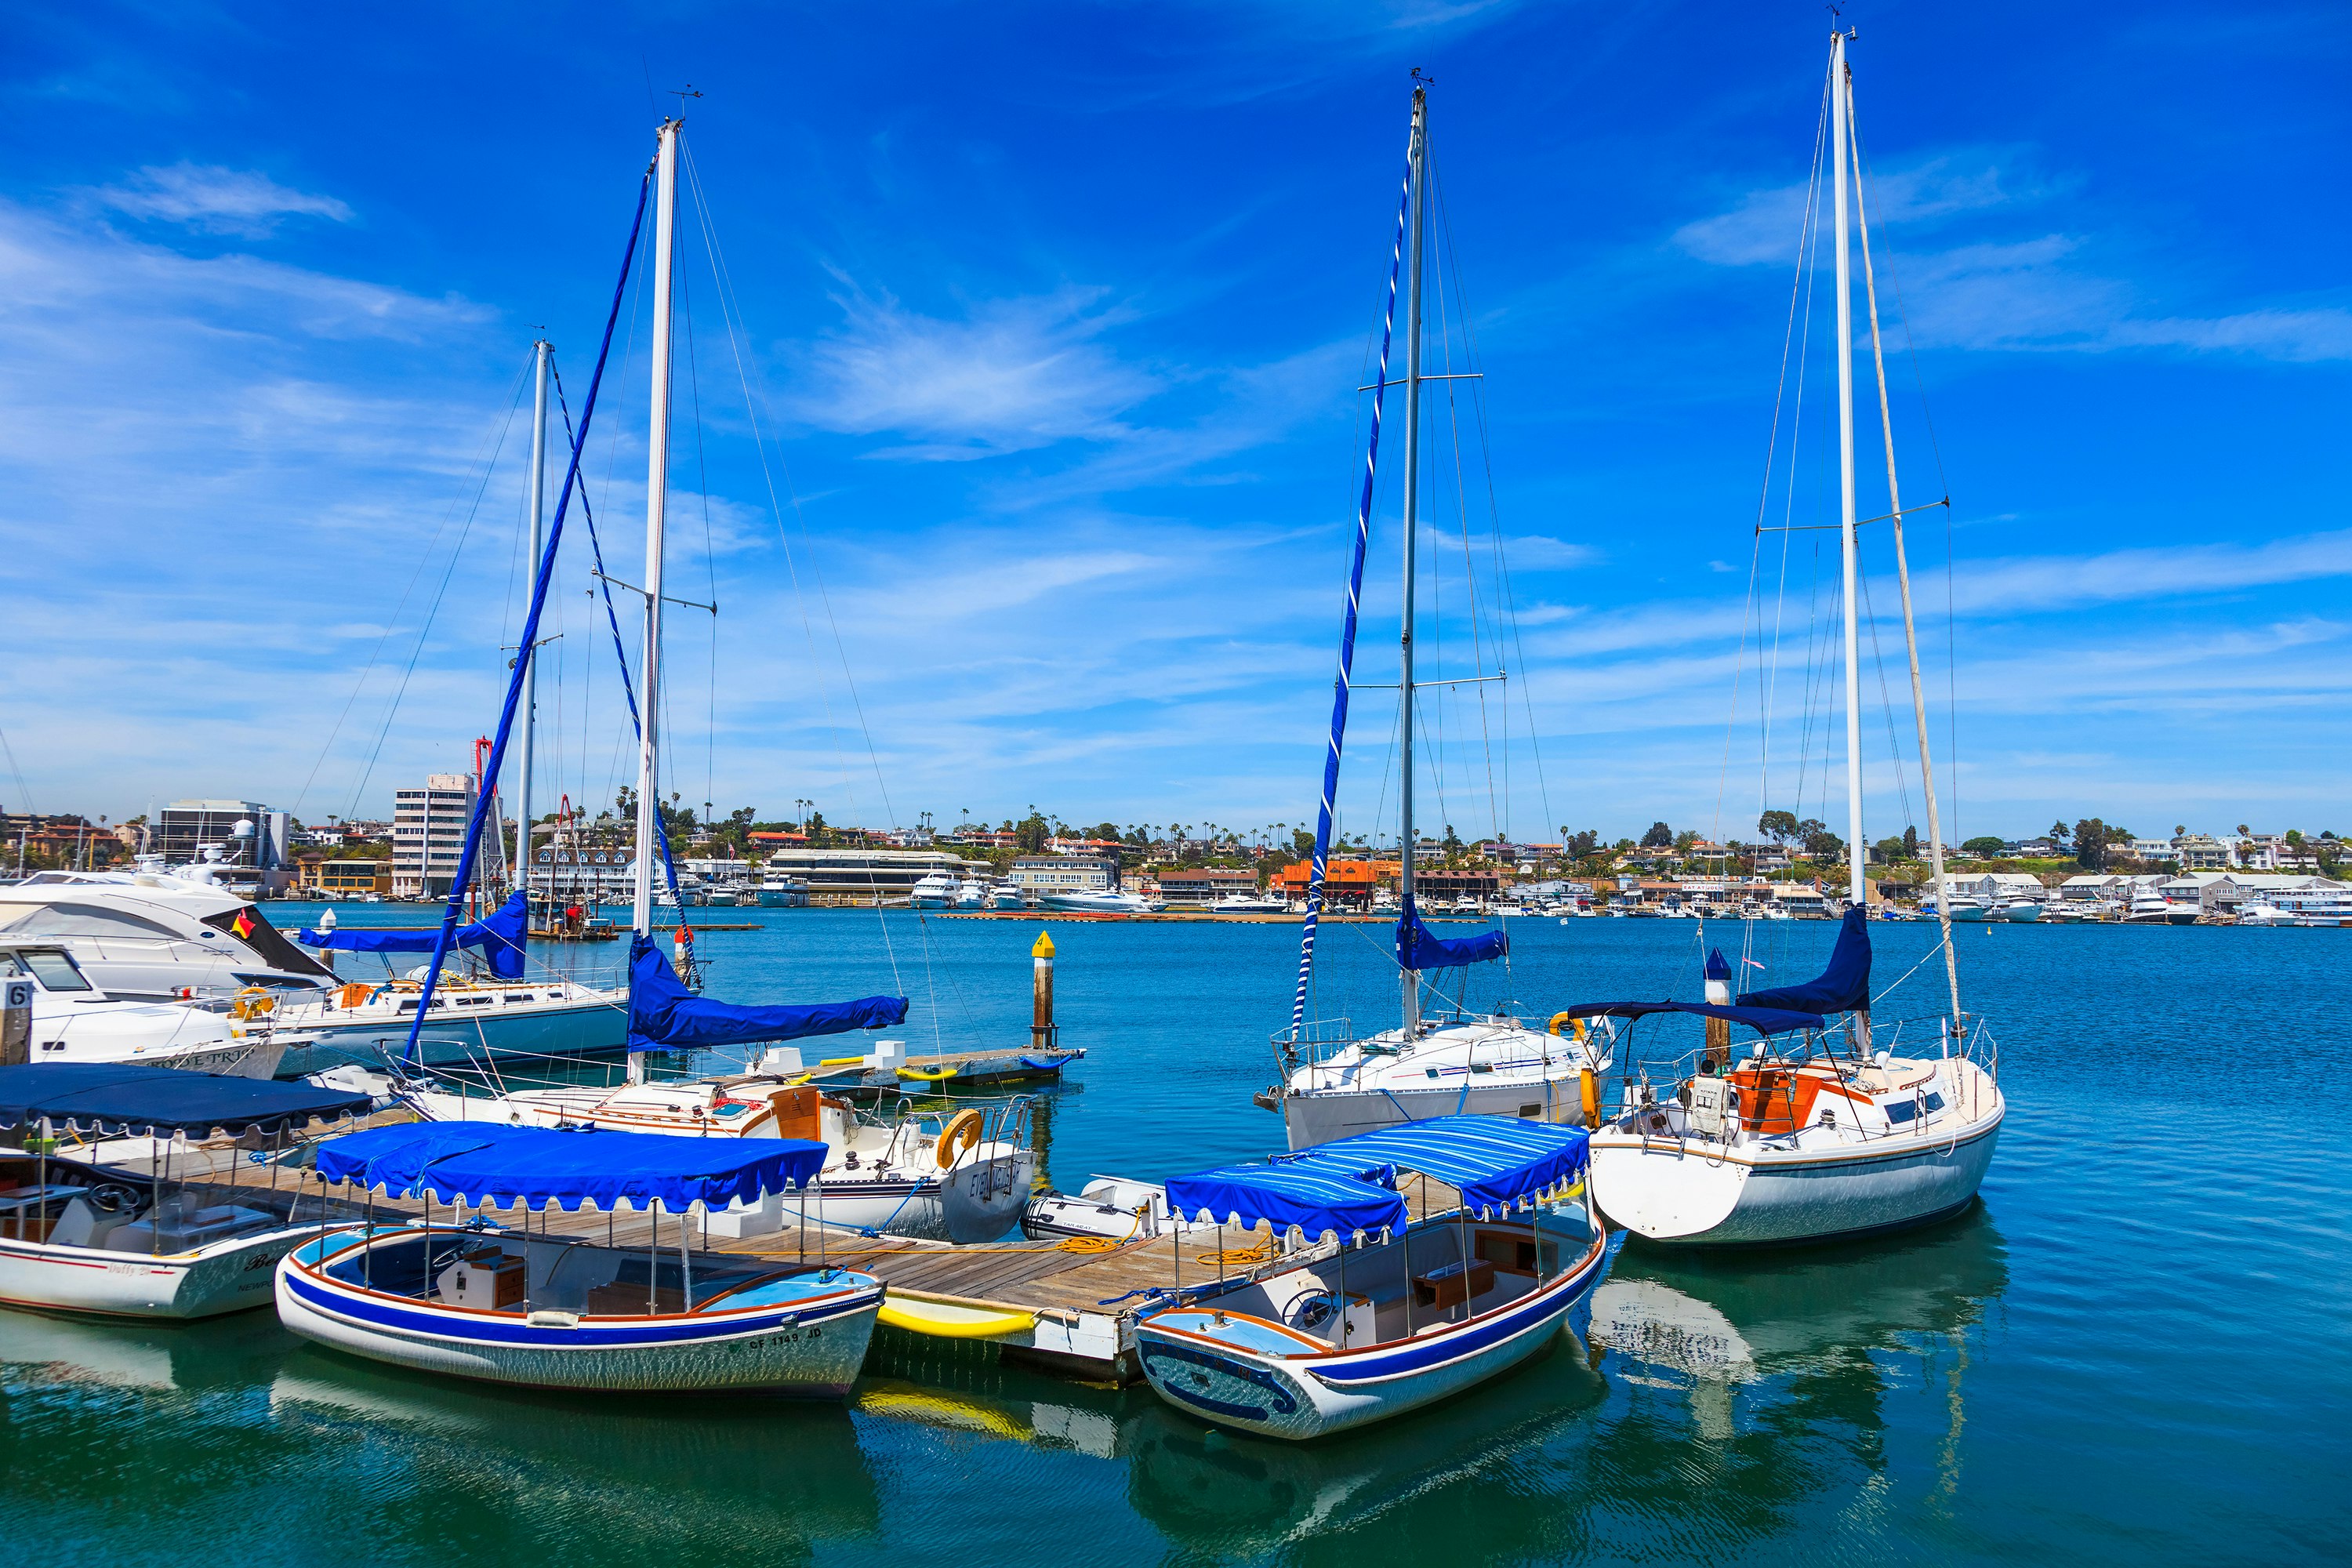 Features - Sail boats moored at Newport Beach, CA